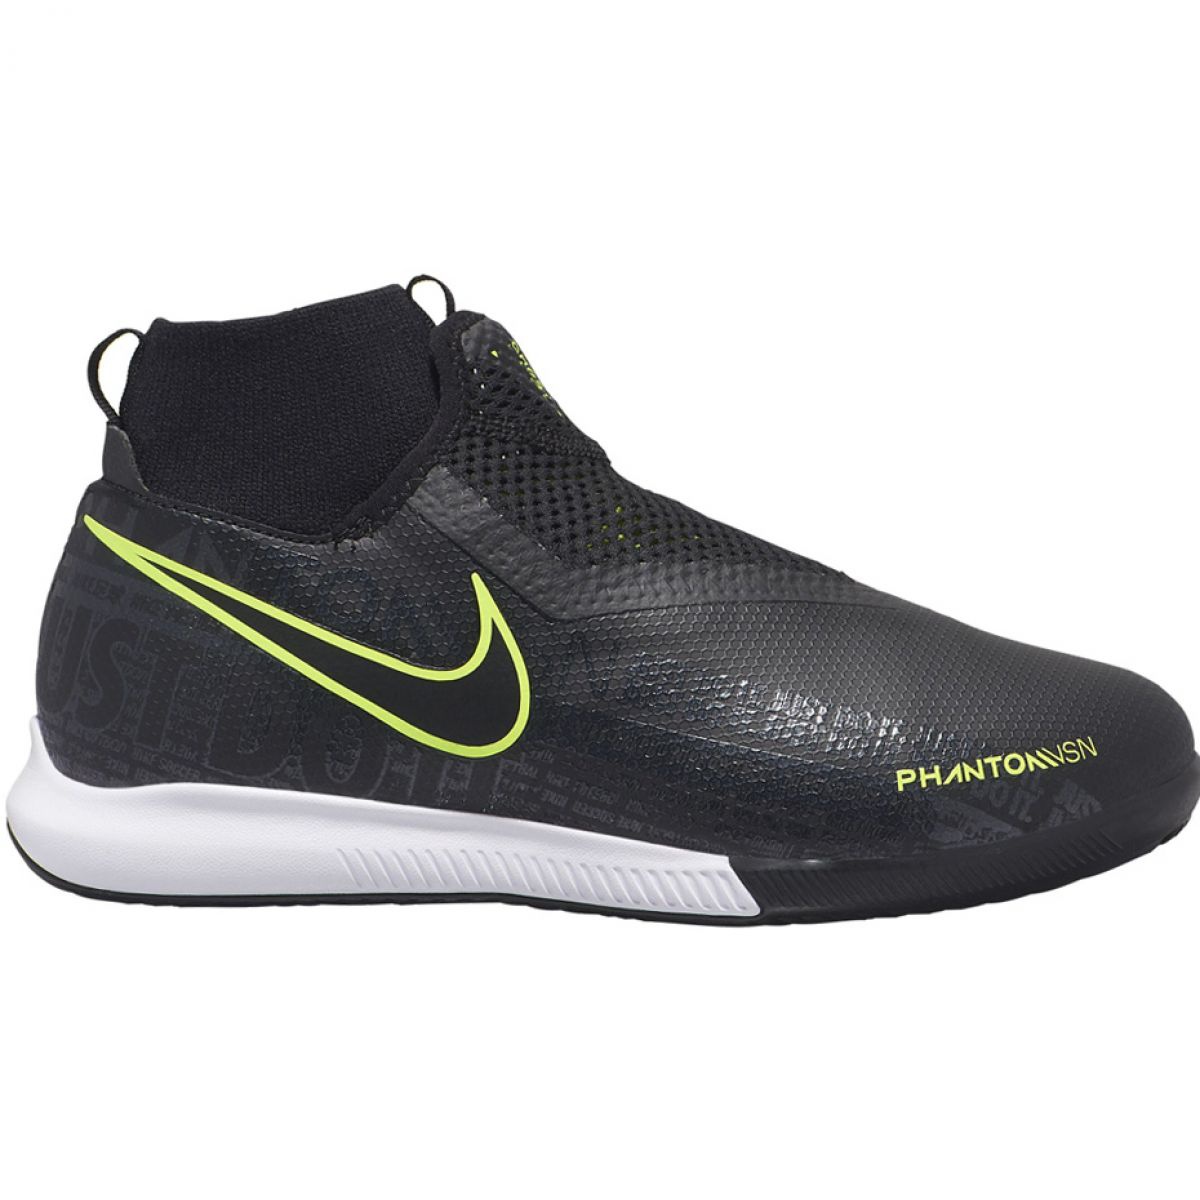 Buty piłkarskie Nike Phantom Vsn Academy